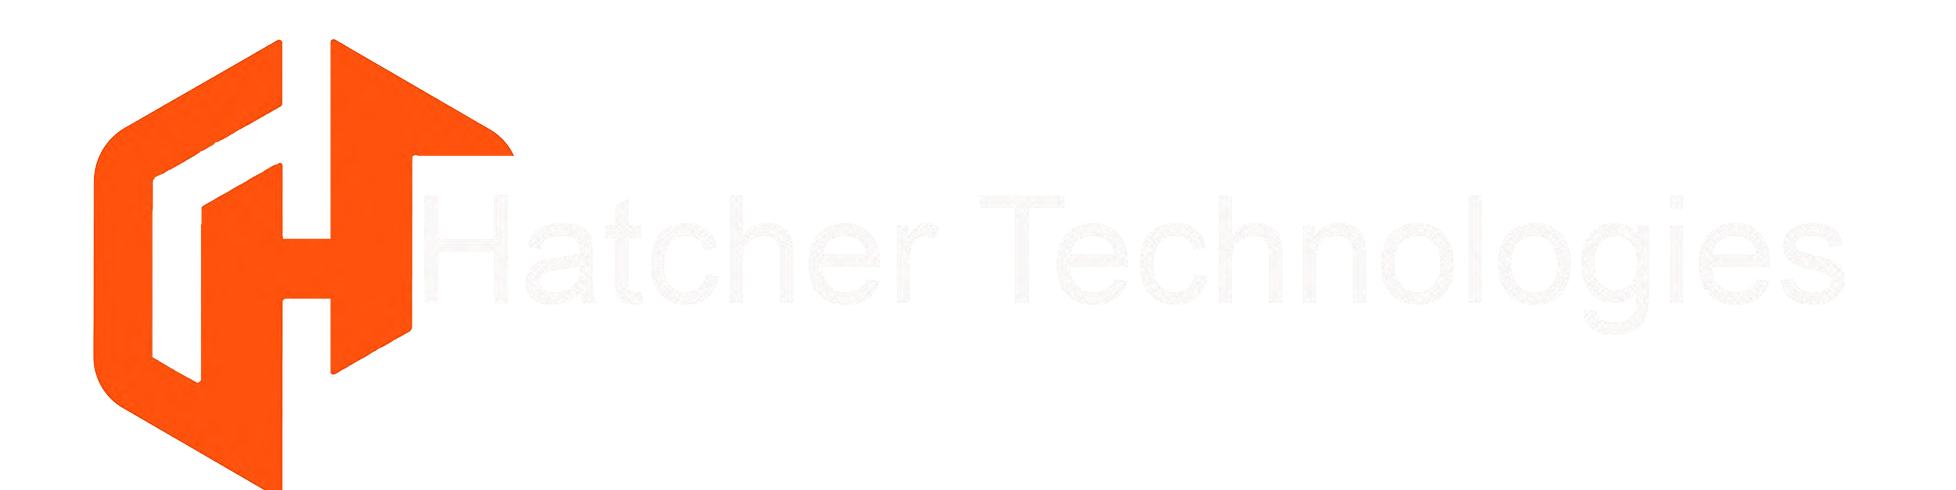 Hatcher Technologies